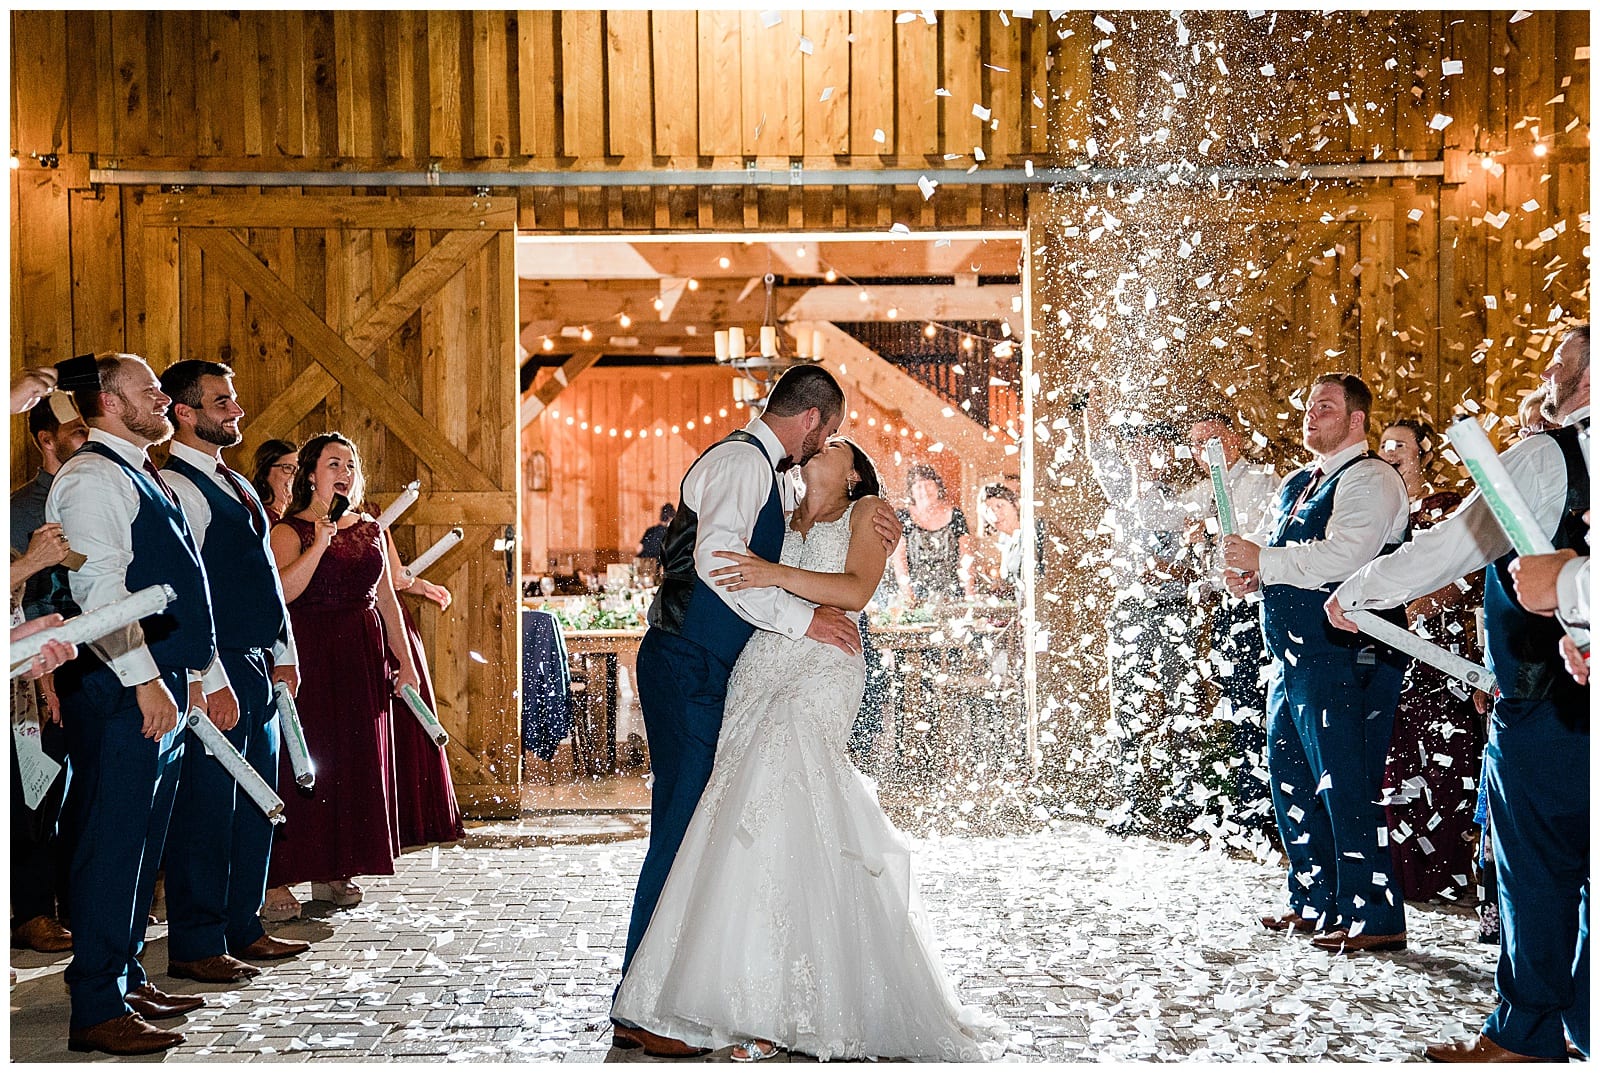 Danielle-Defayette-Photography-Middle-Fork-Barn-Wedding-VA-2020_0057.jpg